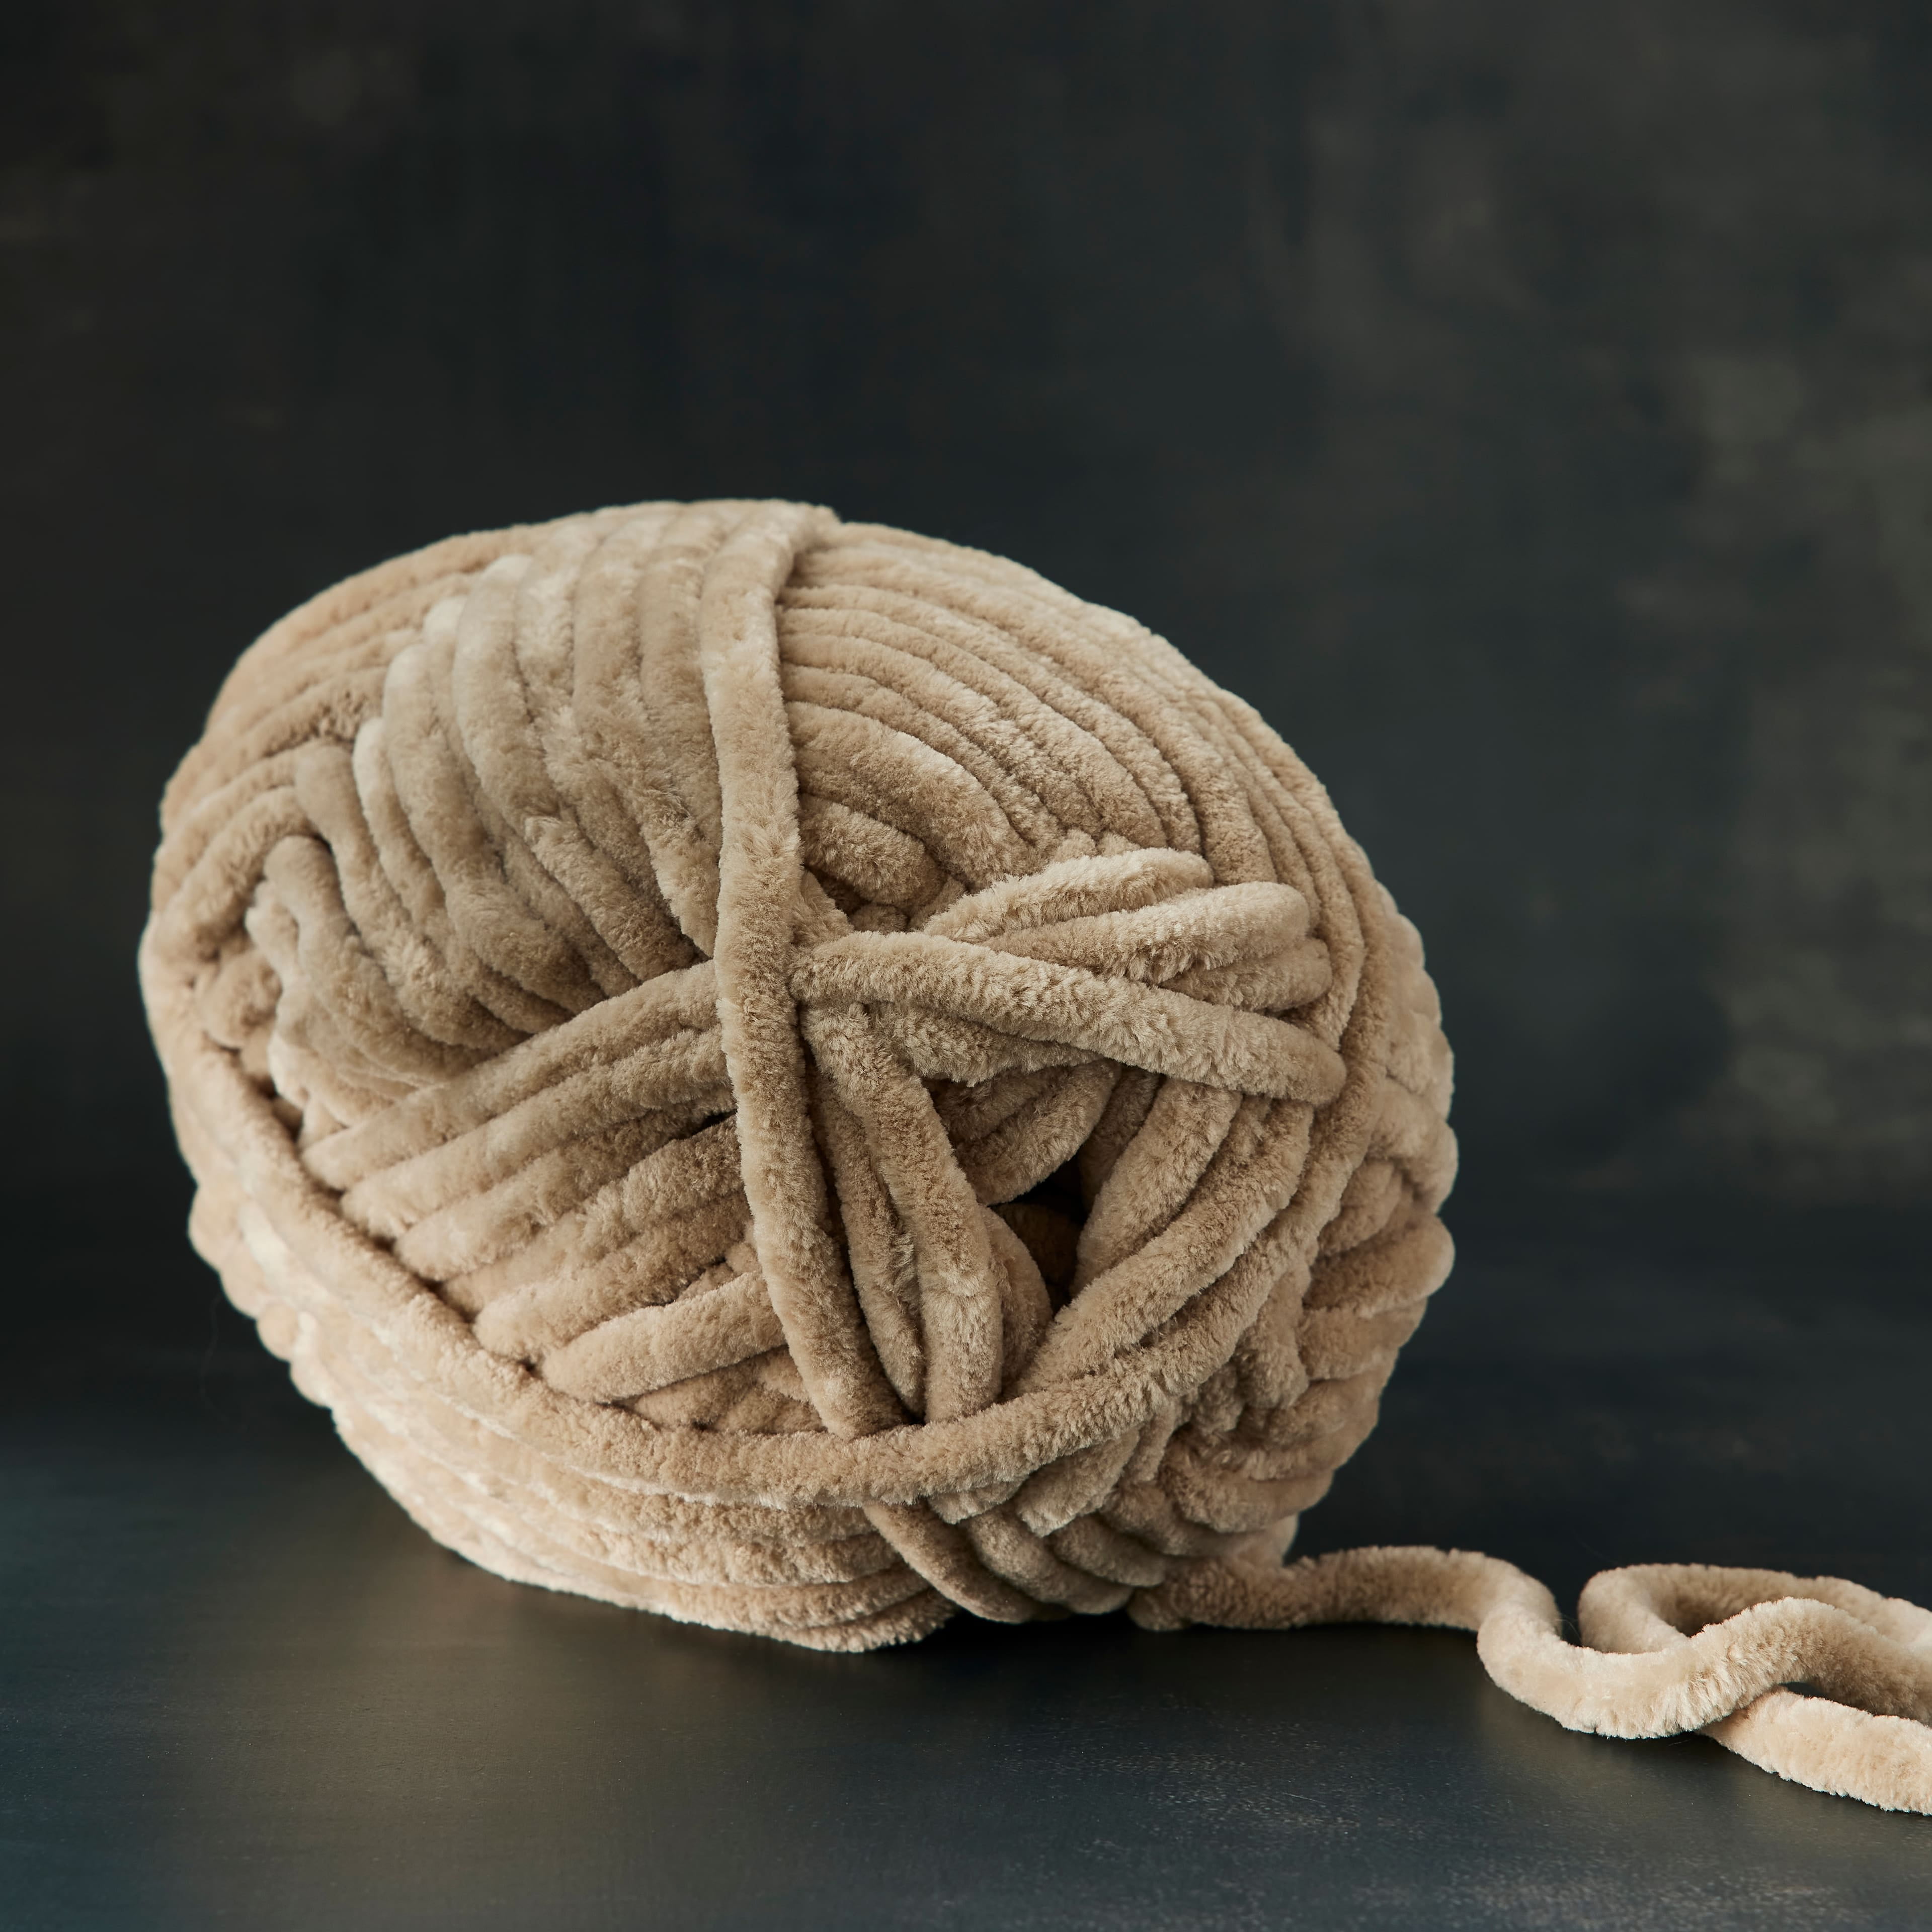 Neutral Yarn Pack – Friendly Loom